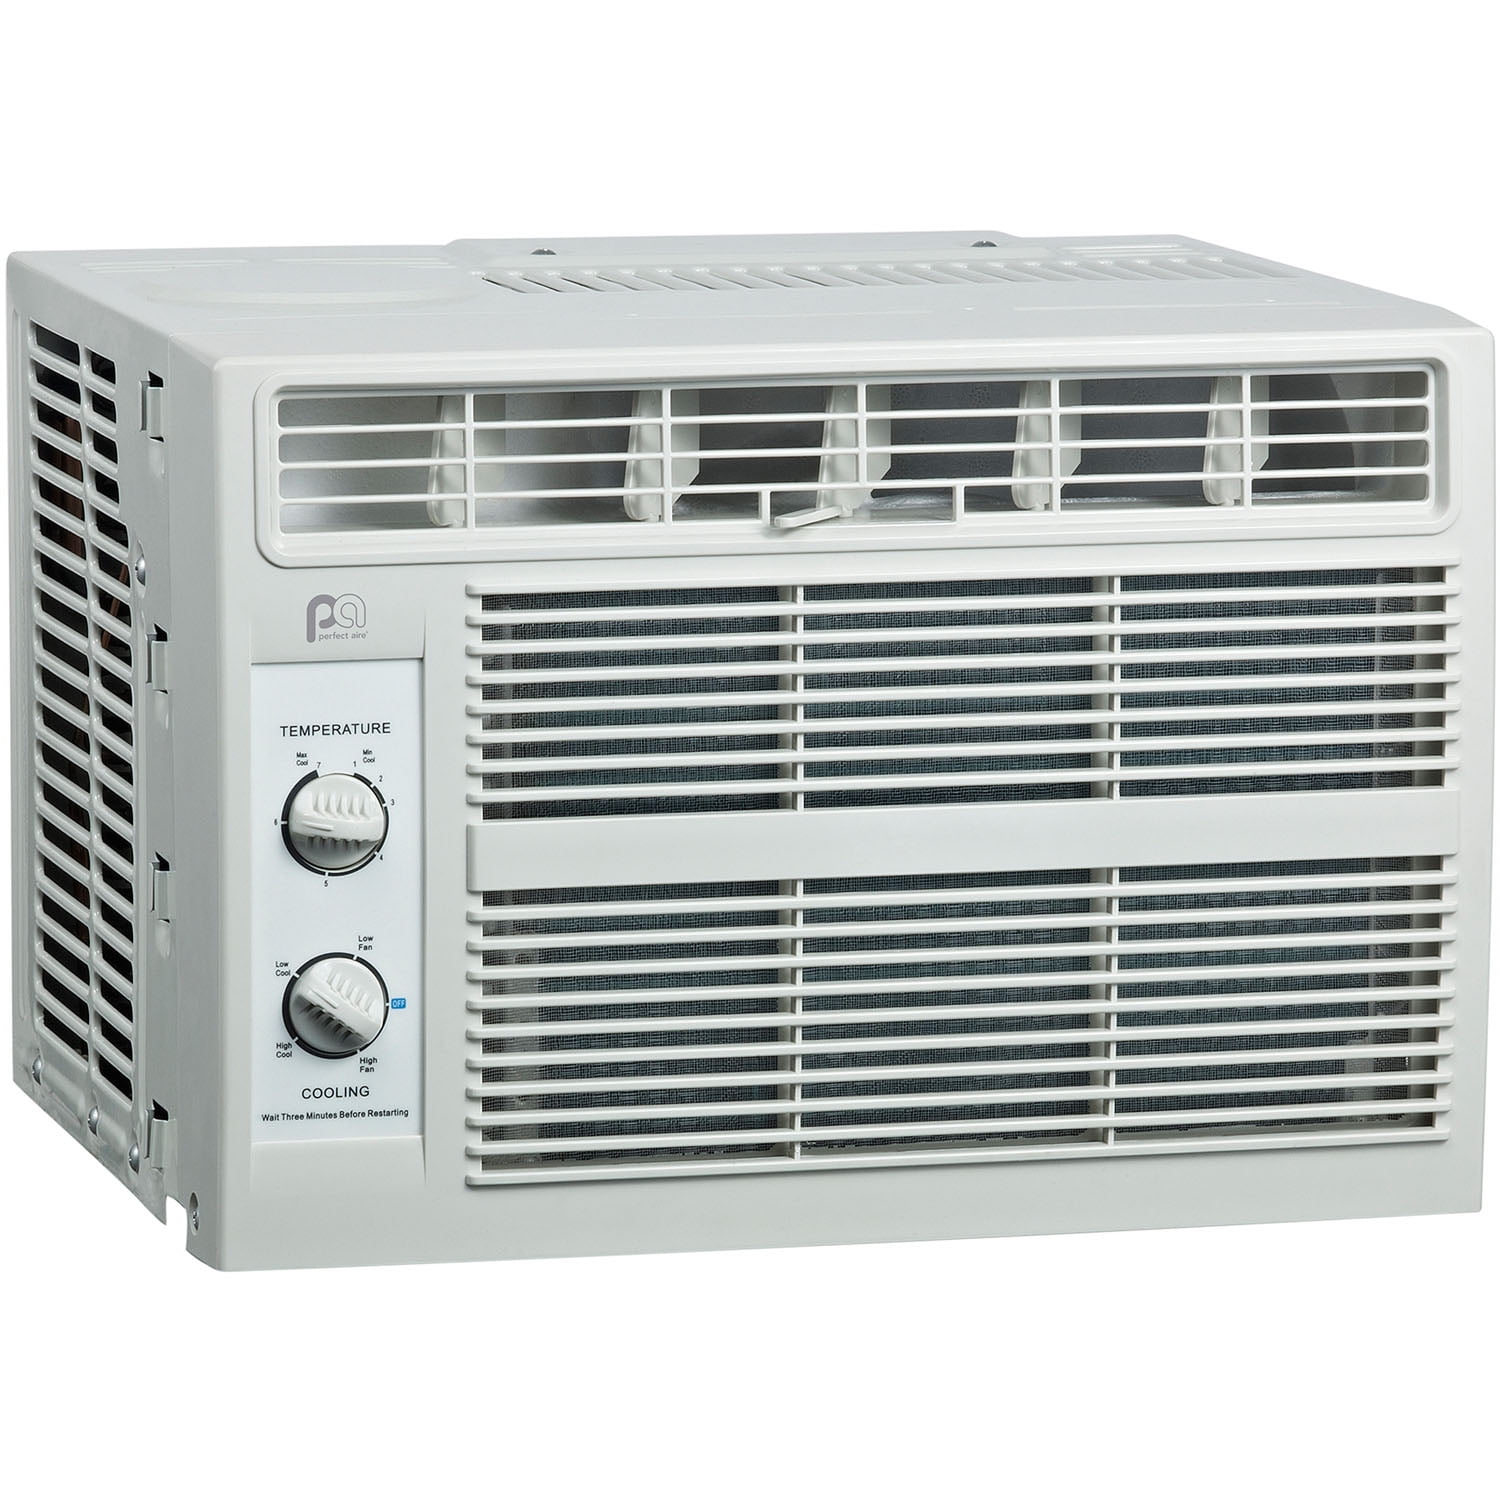 Window Room Air Conditioner With Remote 5000 BTU Capacity 115v 150-Sq Black New! 